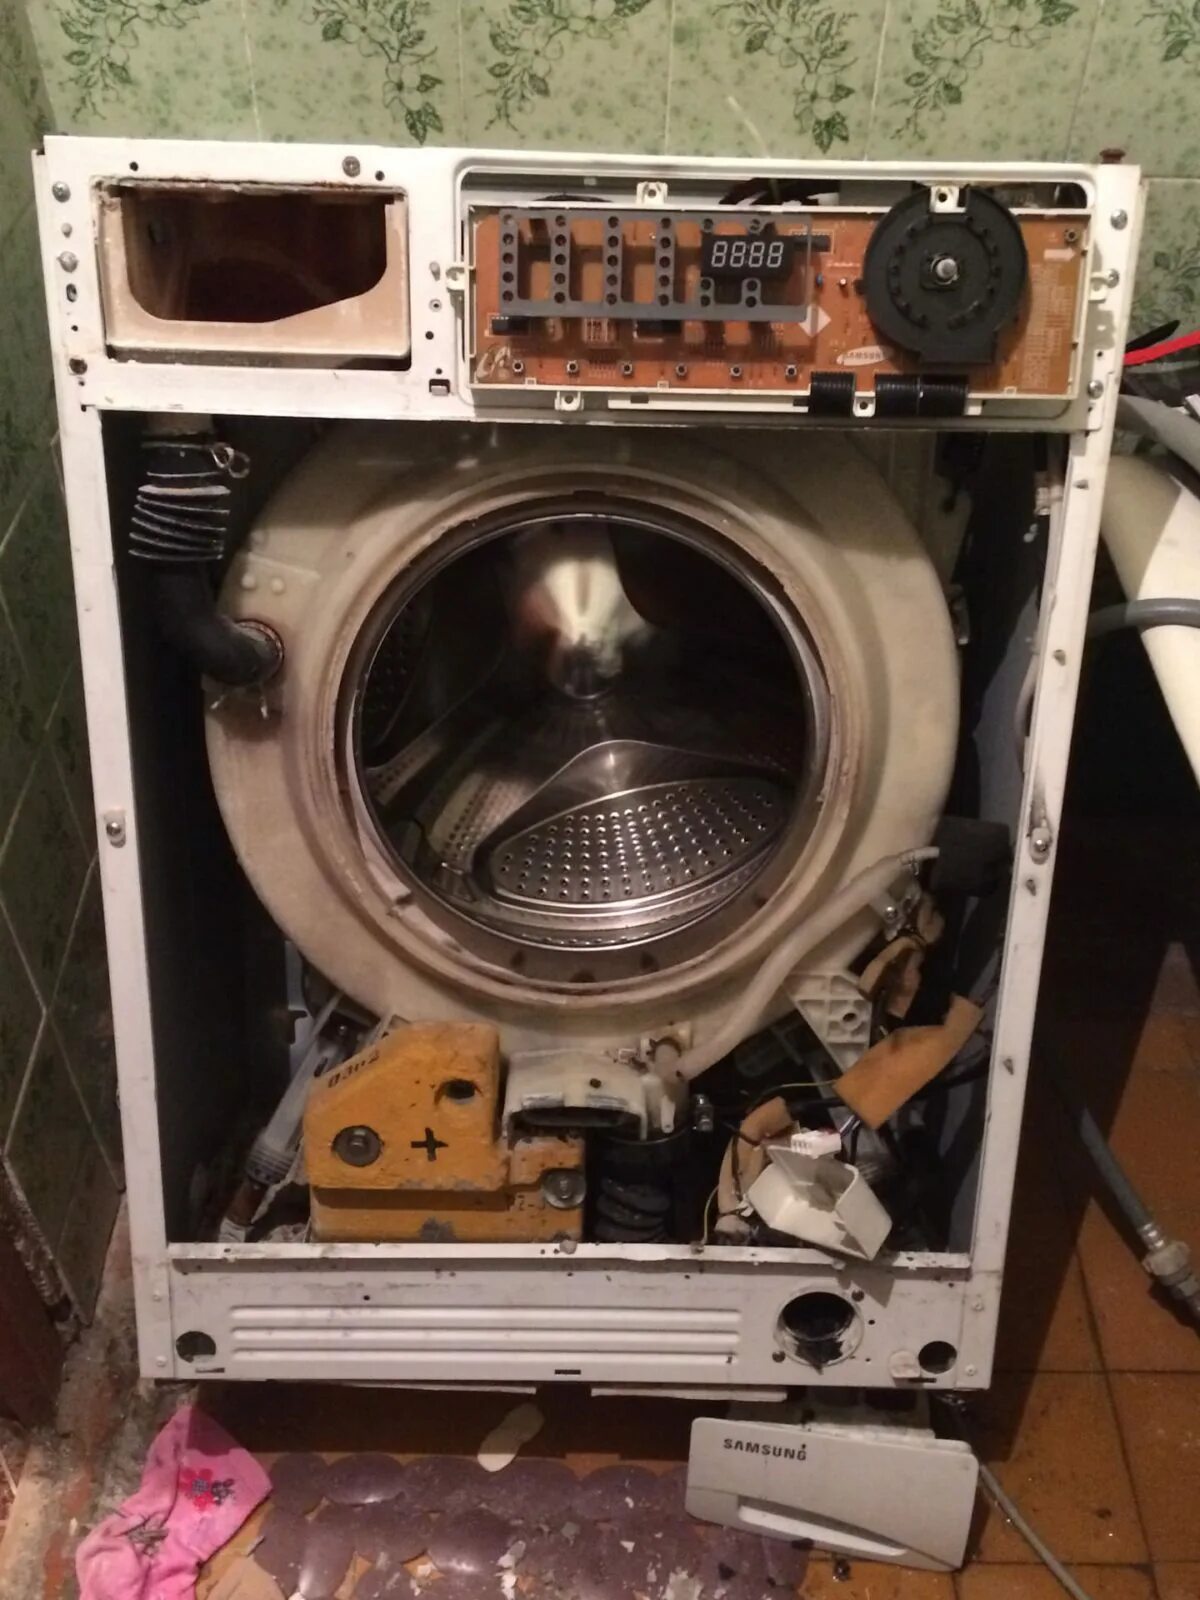 Стиральная машина. Сломанная стиральная машина. Поломанная стиральная машина. Разобранная стиральная машина.